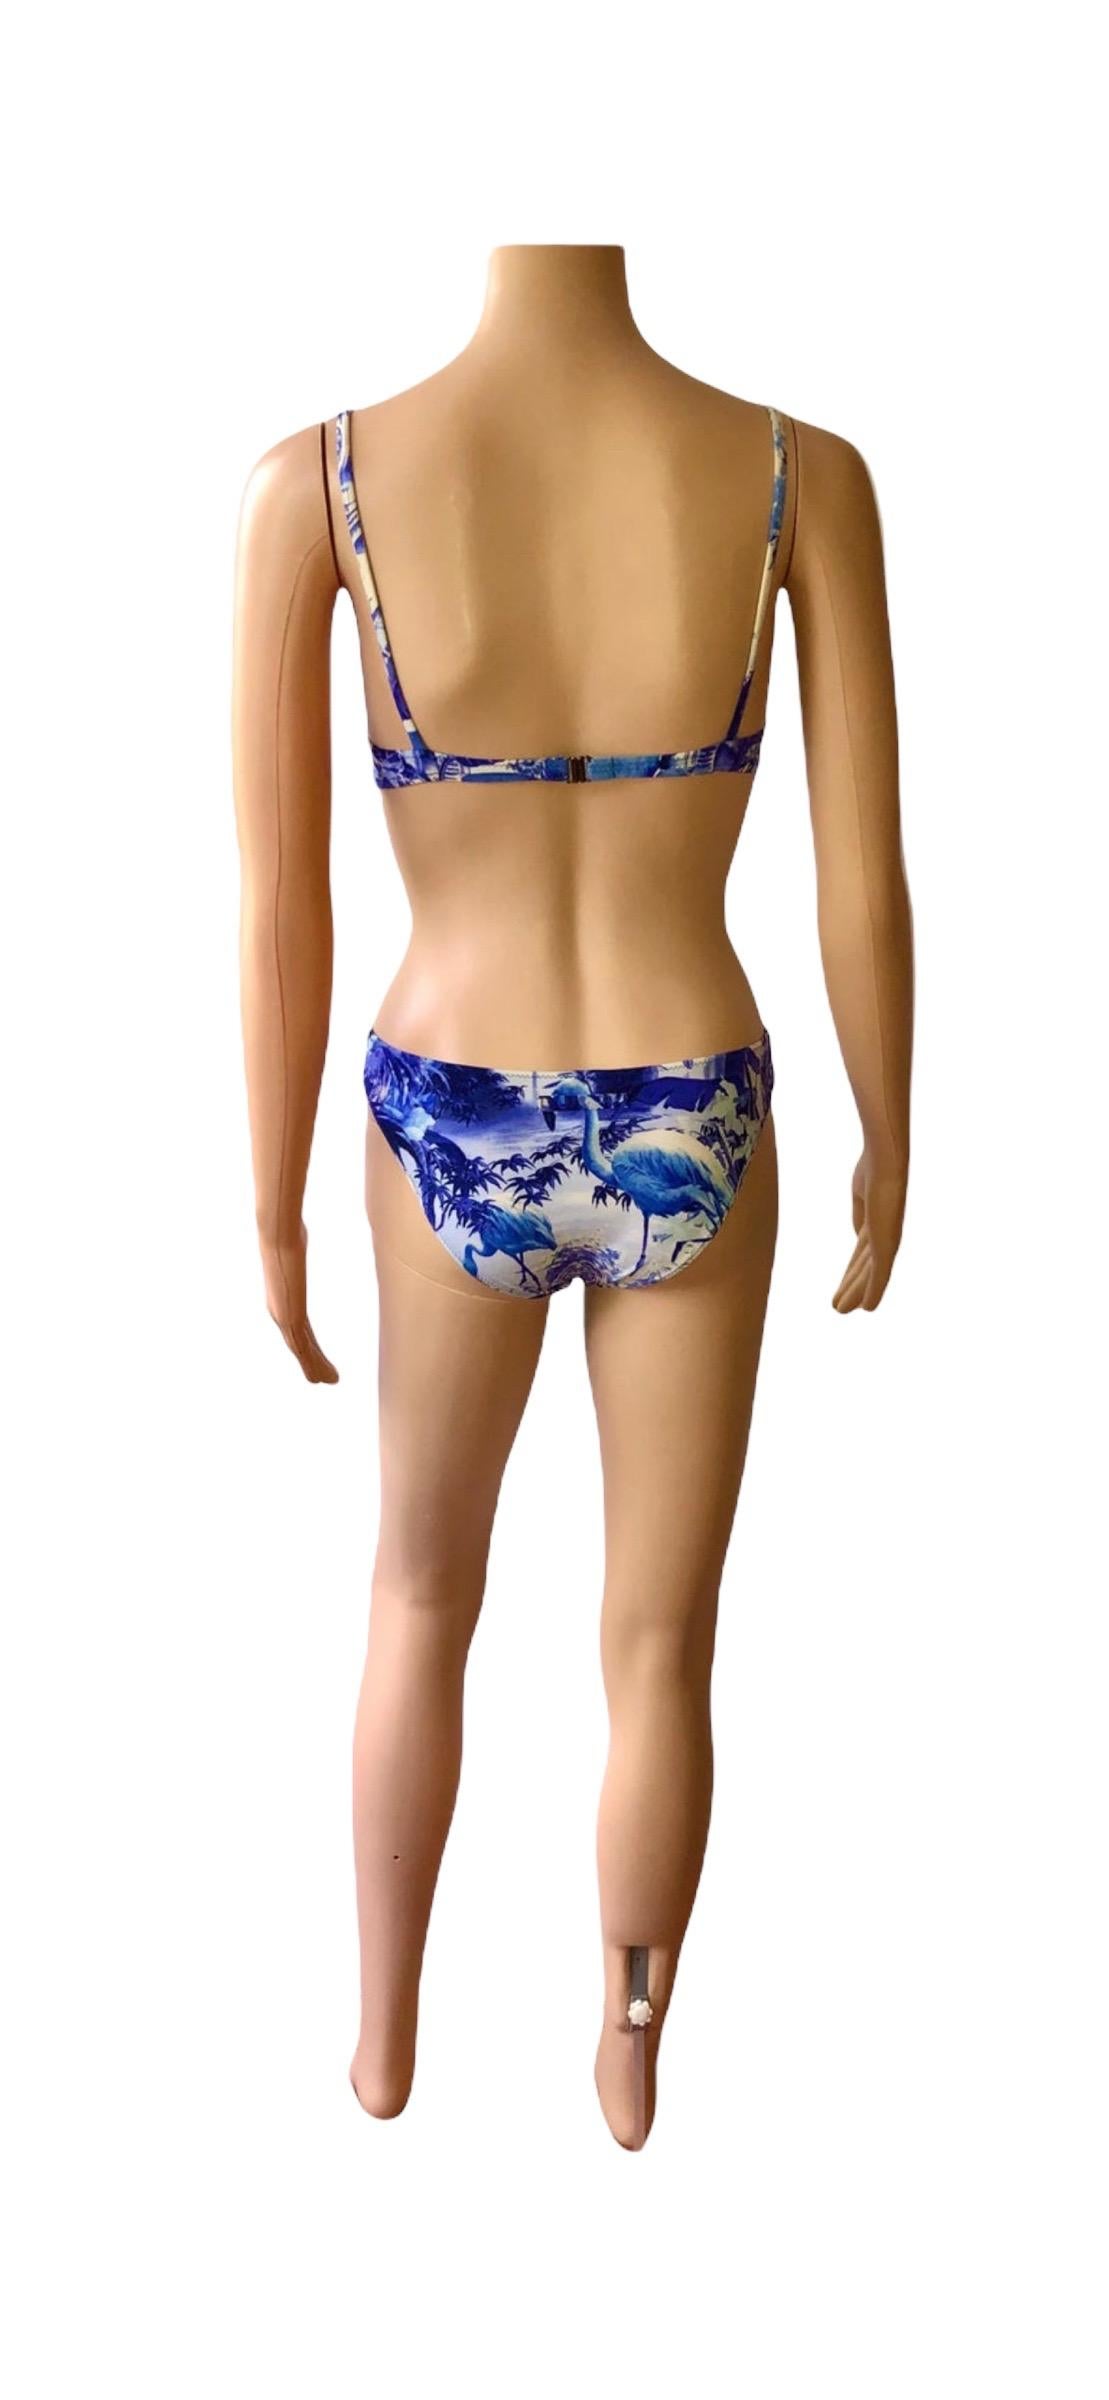 Jean Paul Gaultier Soleil S/S 1999 Flamingo Tropical Bikini Swimsuit 2 Piece Set For Sale 7